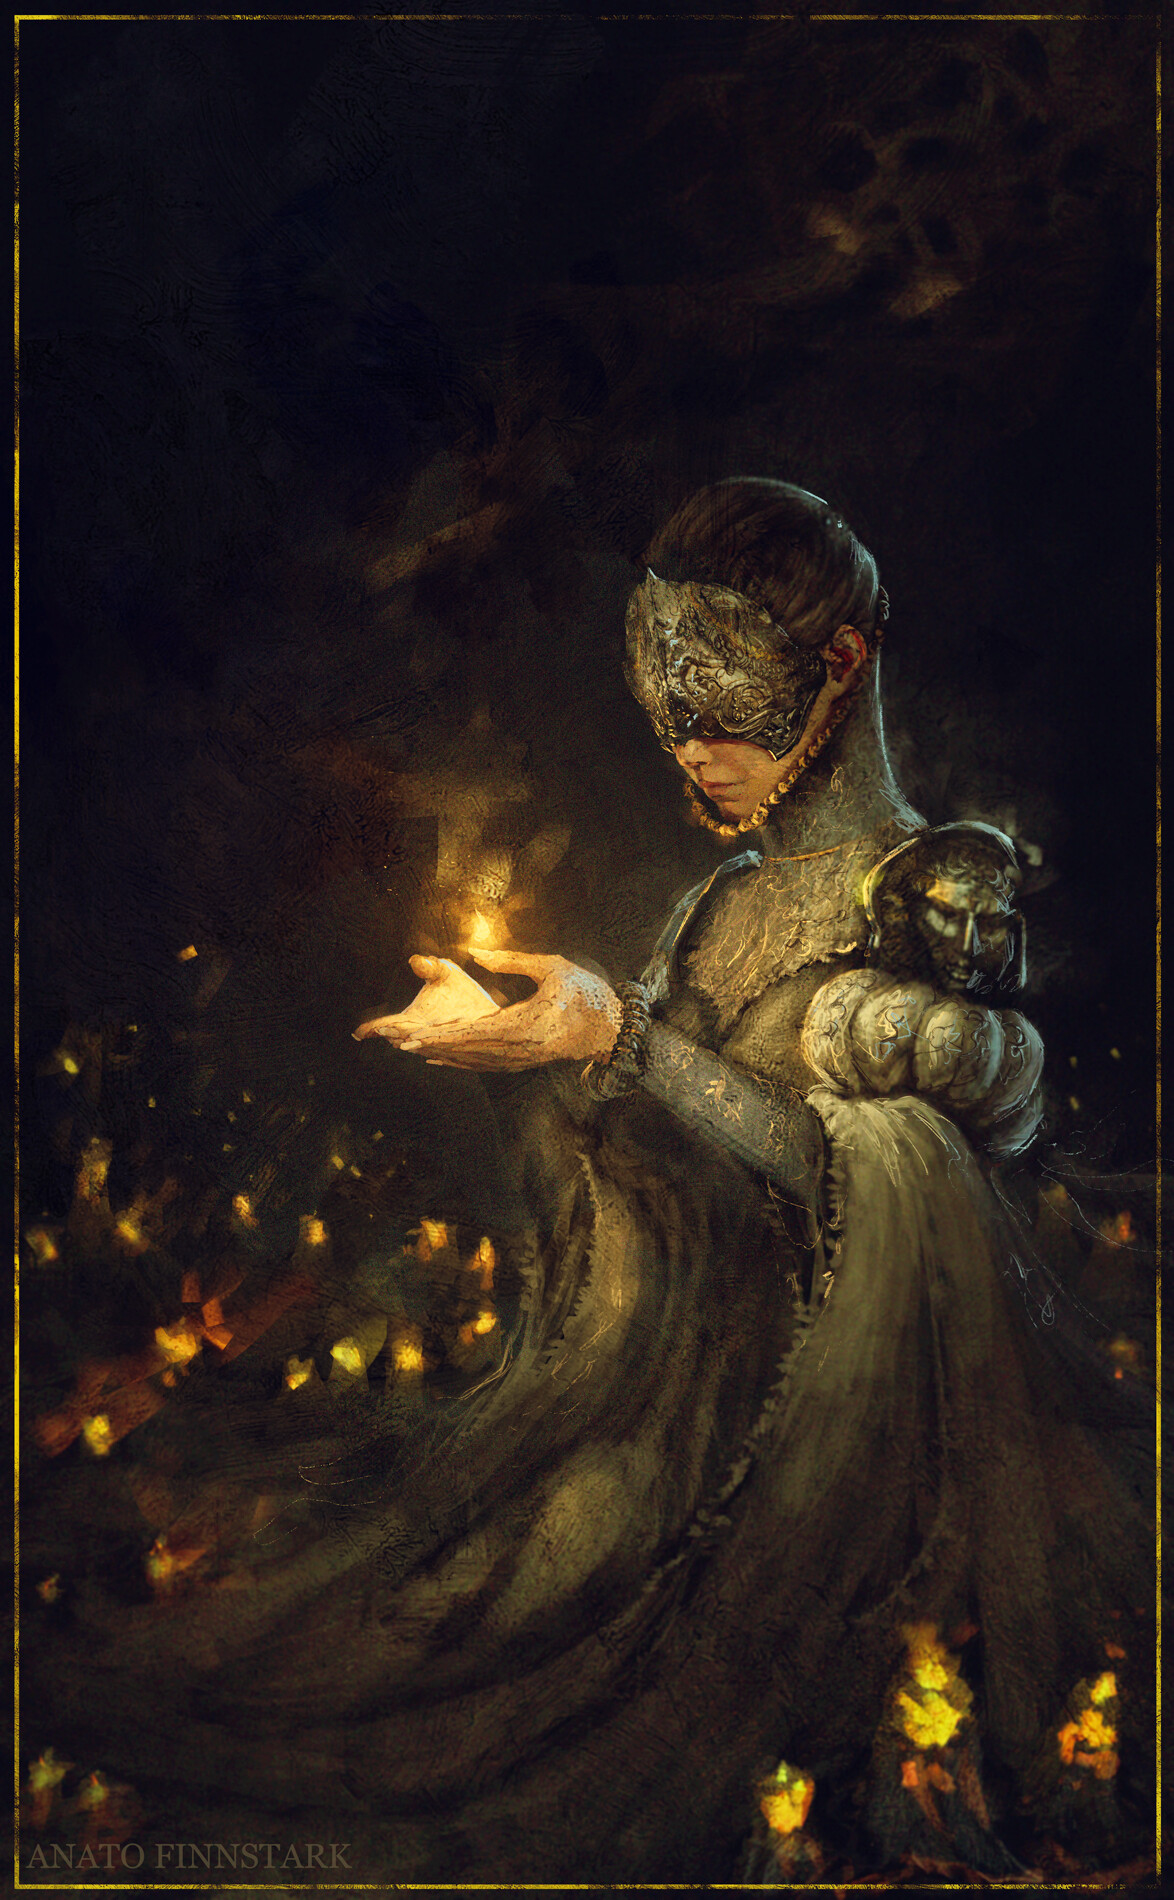 Фото Fire keeper / Хранительница огня из игры Dark Souls / Темные Души, by Anato Finnstark